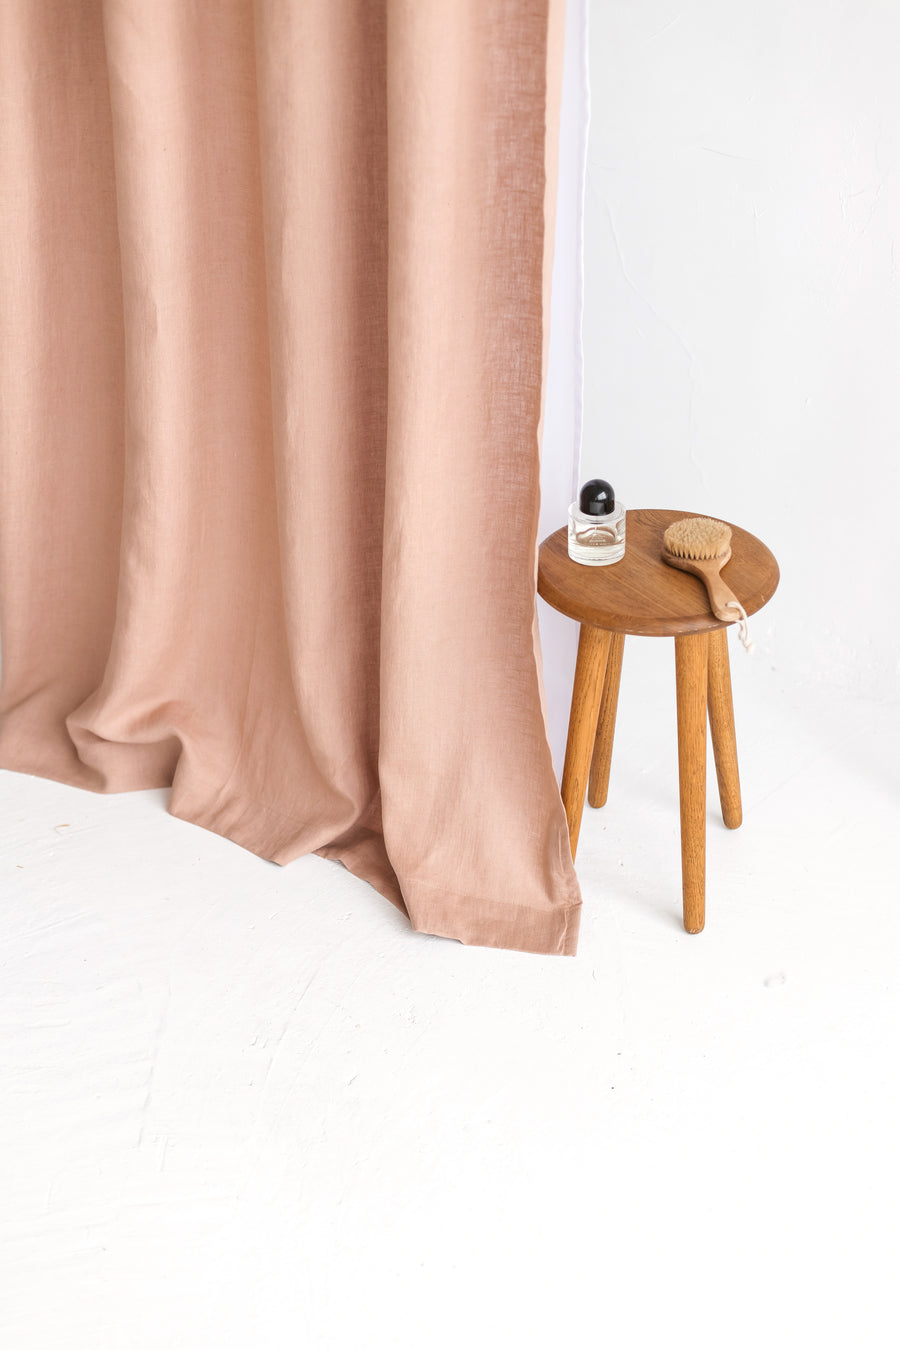 Waterproof Peach Linen Shower Curtain 140cm / 55'' width